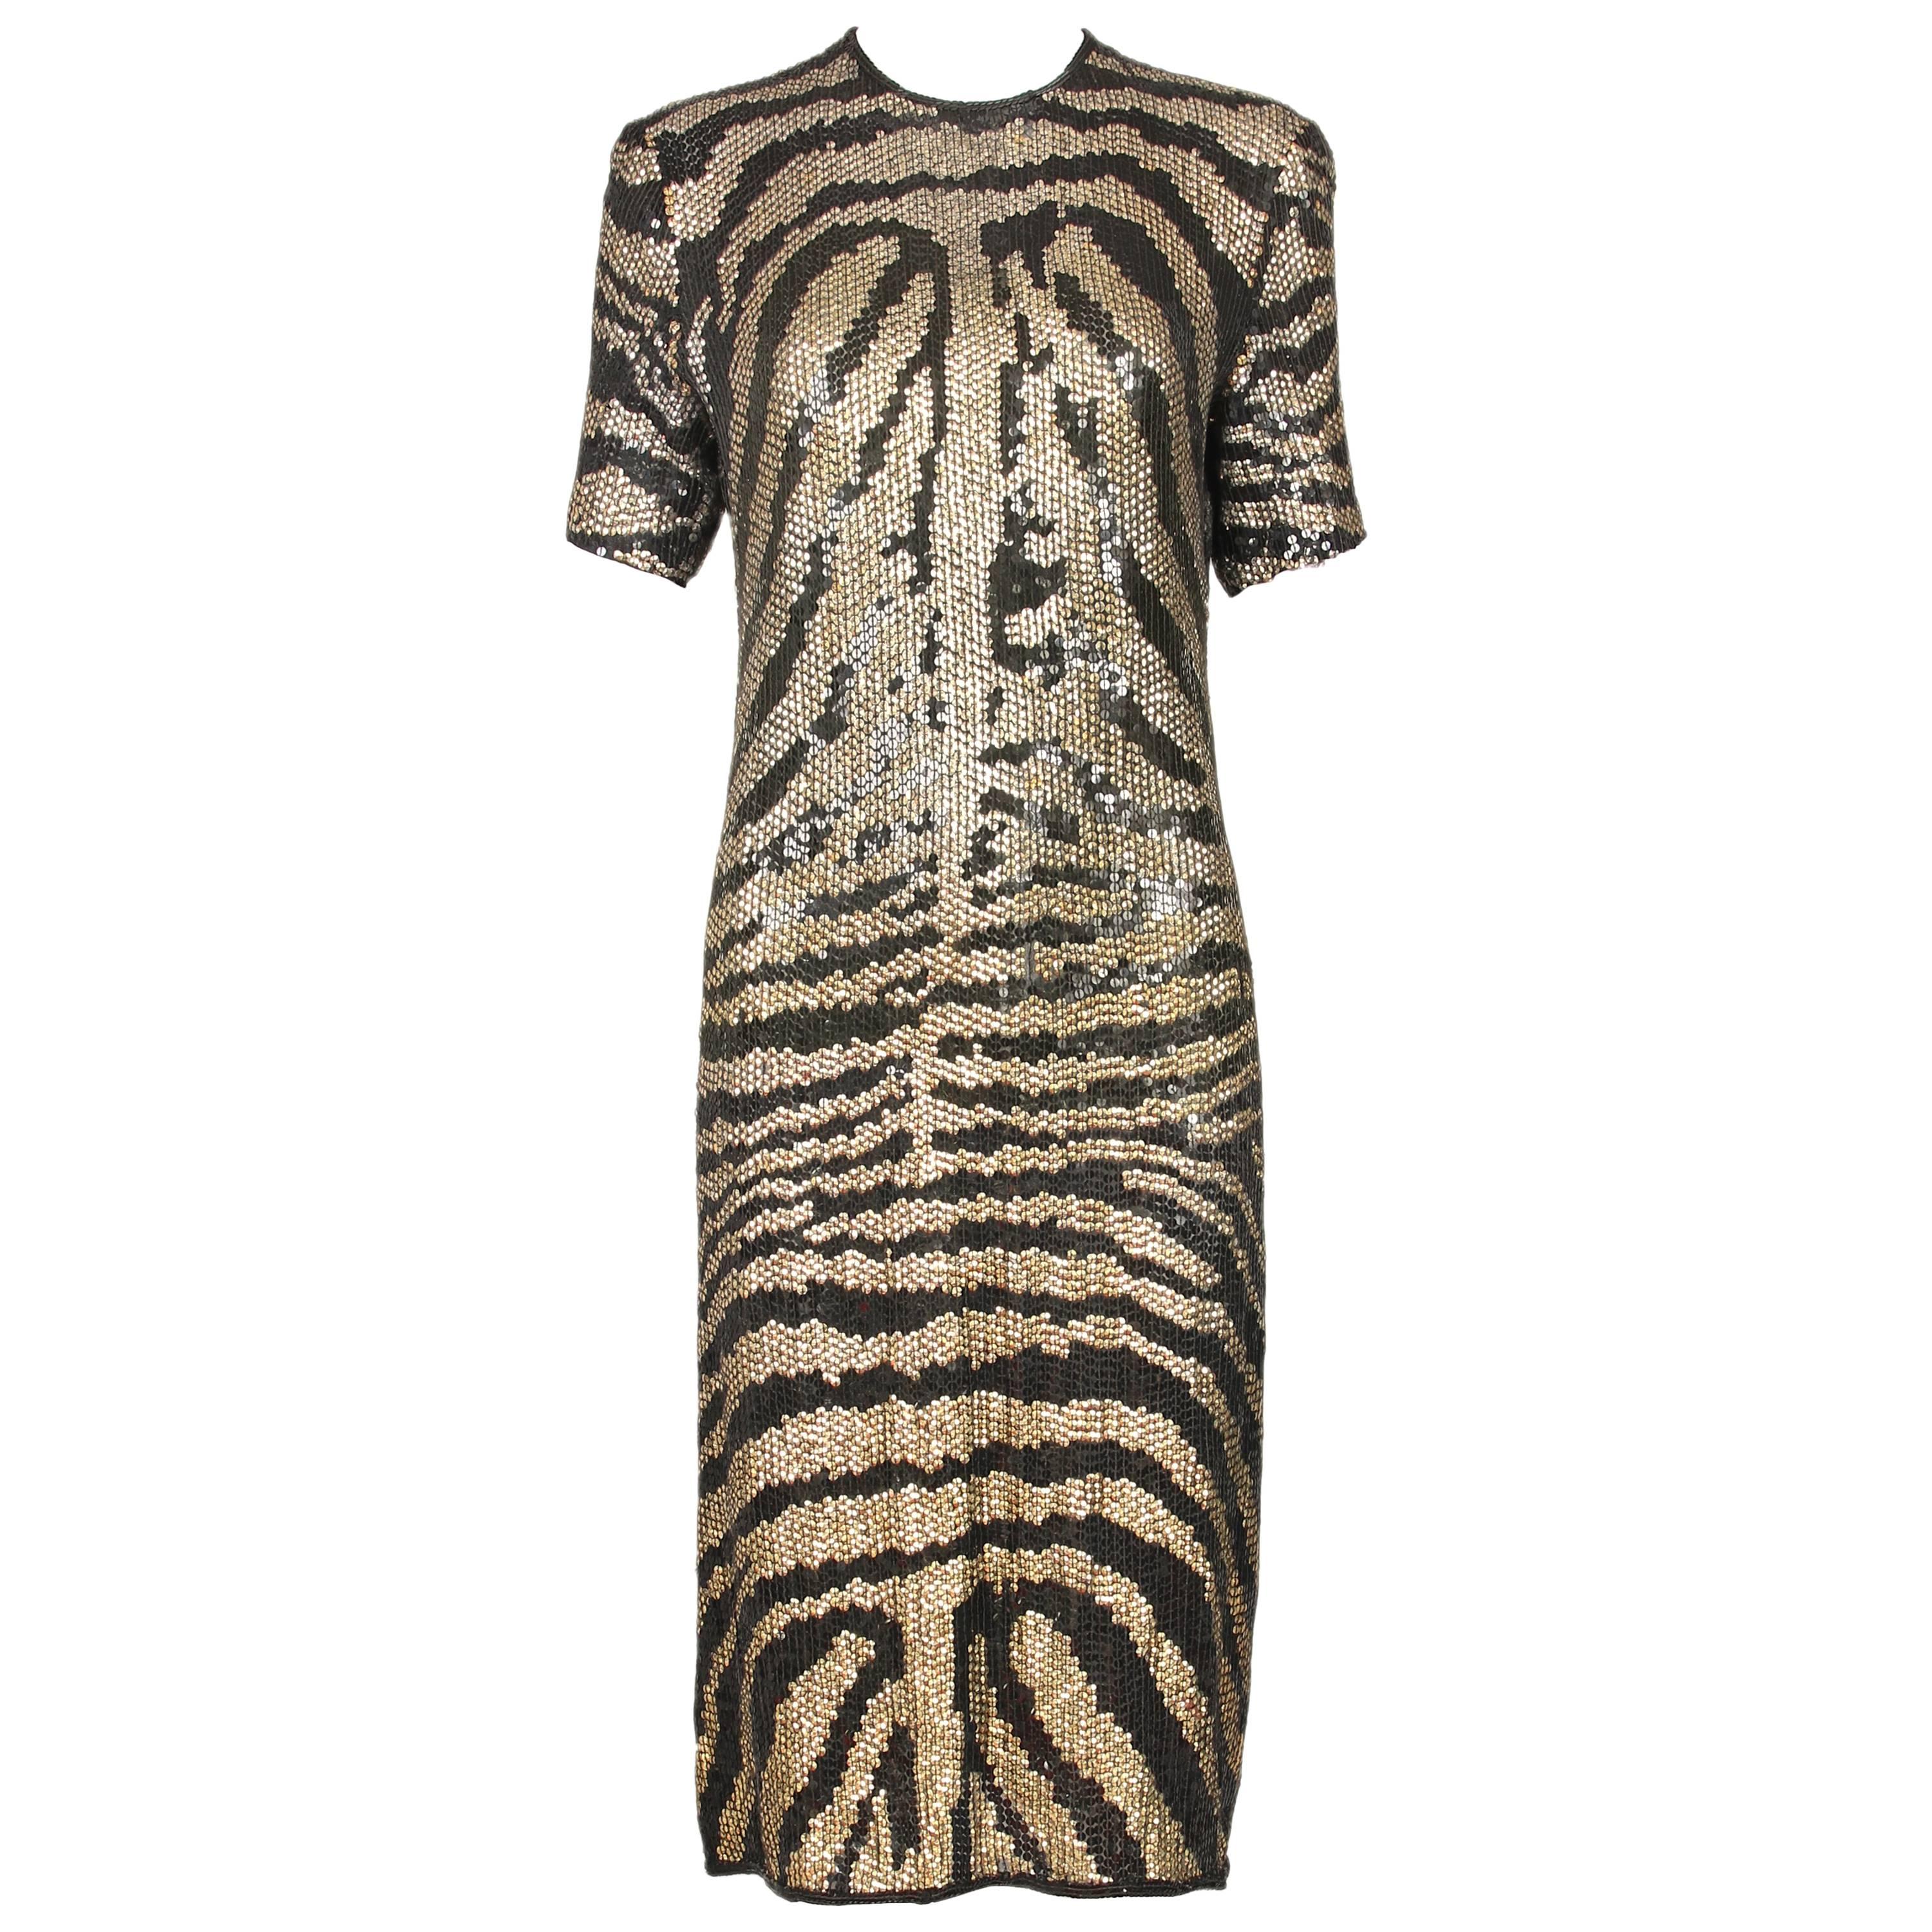 1970's Halston Gold & Black Sequin Tiger or Zebra Print Evening Dress